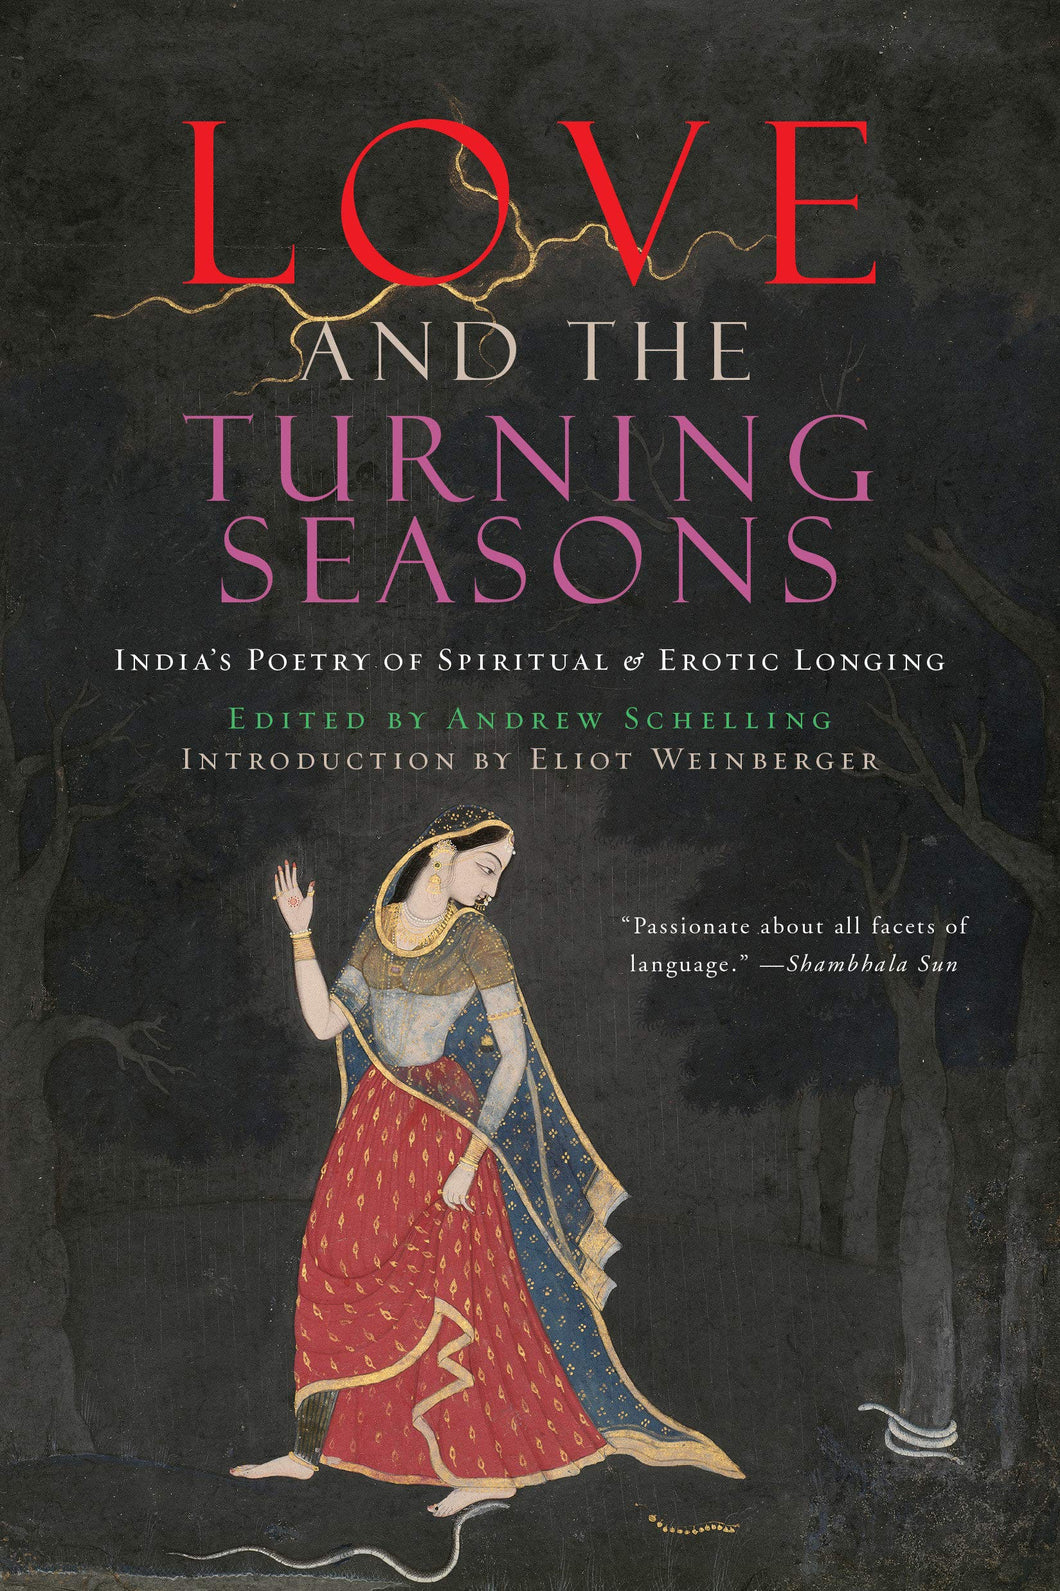 Love and the Turning Seasons : India's Poetry of Spiritual & Erotic Longing ร้านหนังสือและสิ่งของ เป็นร้านหนังสือภาษาอังกฤษหายาก และร้านกาแฟ หรือ บุ๊คคาเฟ่ ตั้งอยู่สุขุมวิท กรุงเทพ